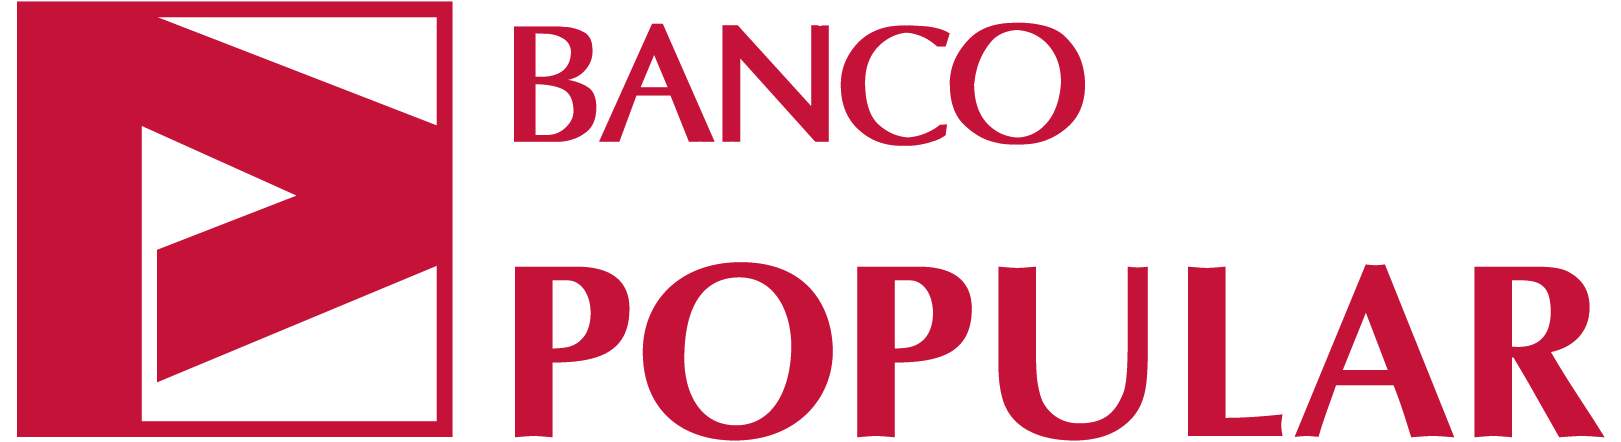 logo-banco-popular1 1